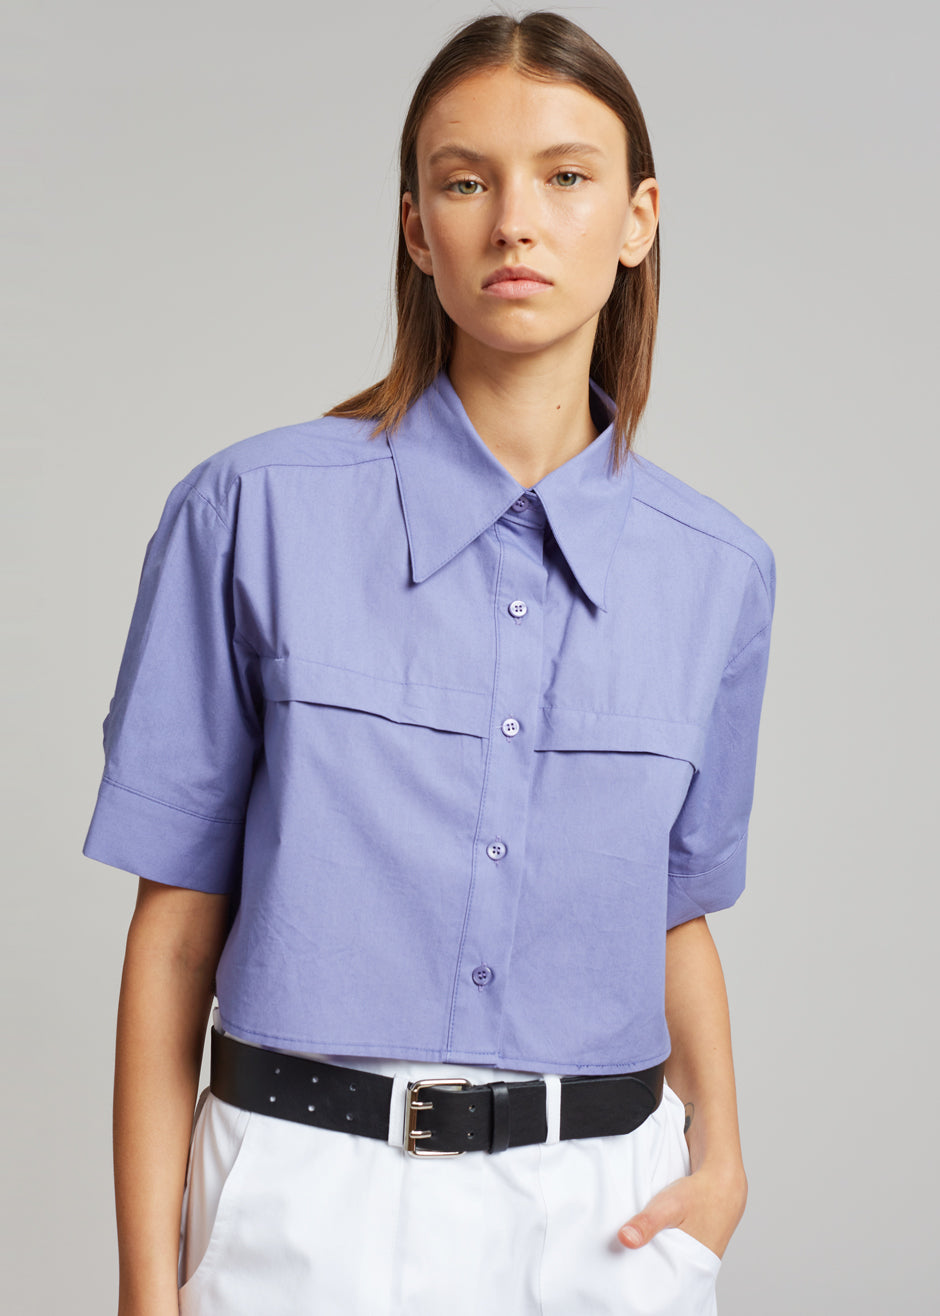 Ada Cropped Pocket Shirt - Purple - 3